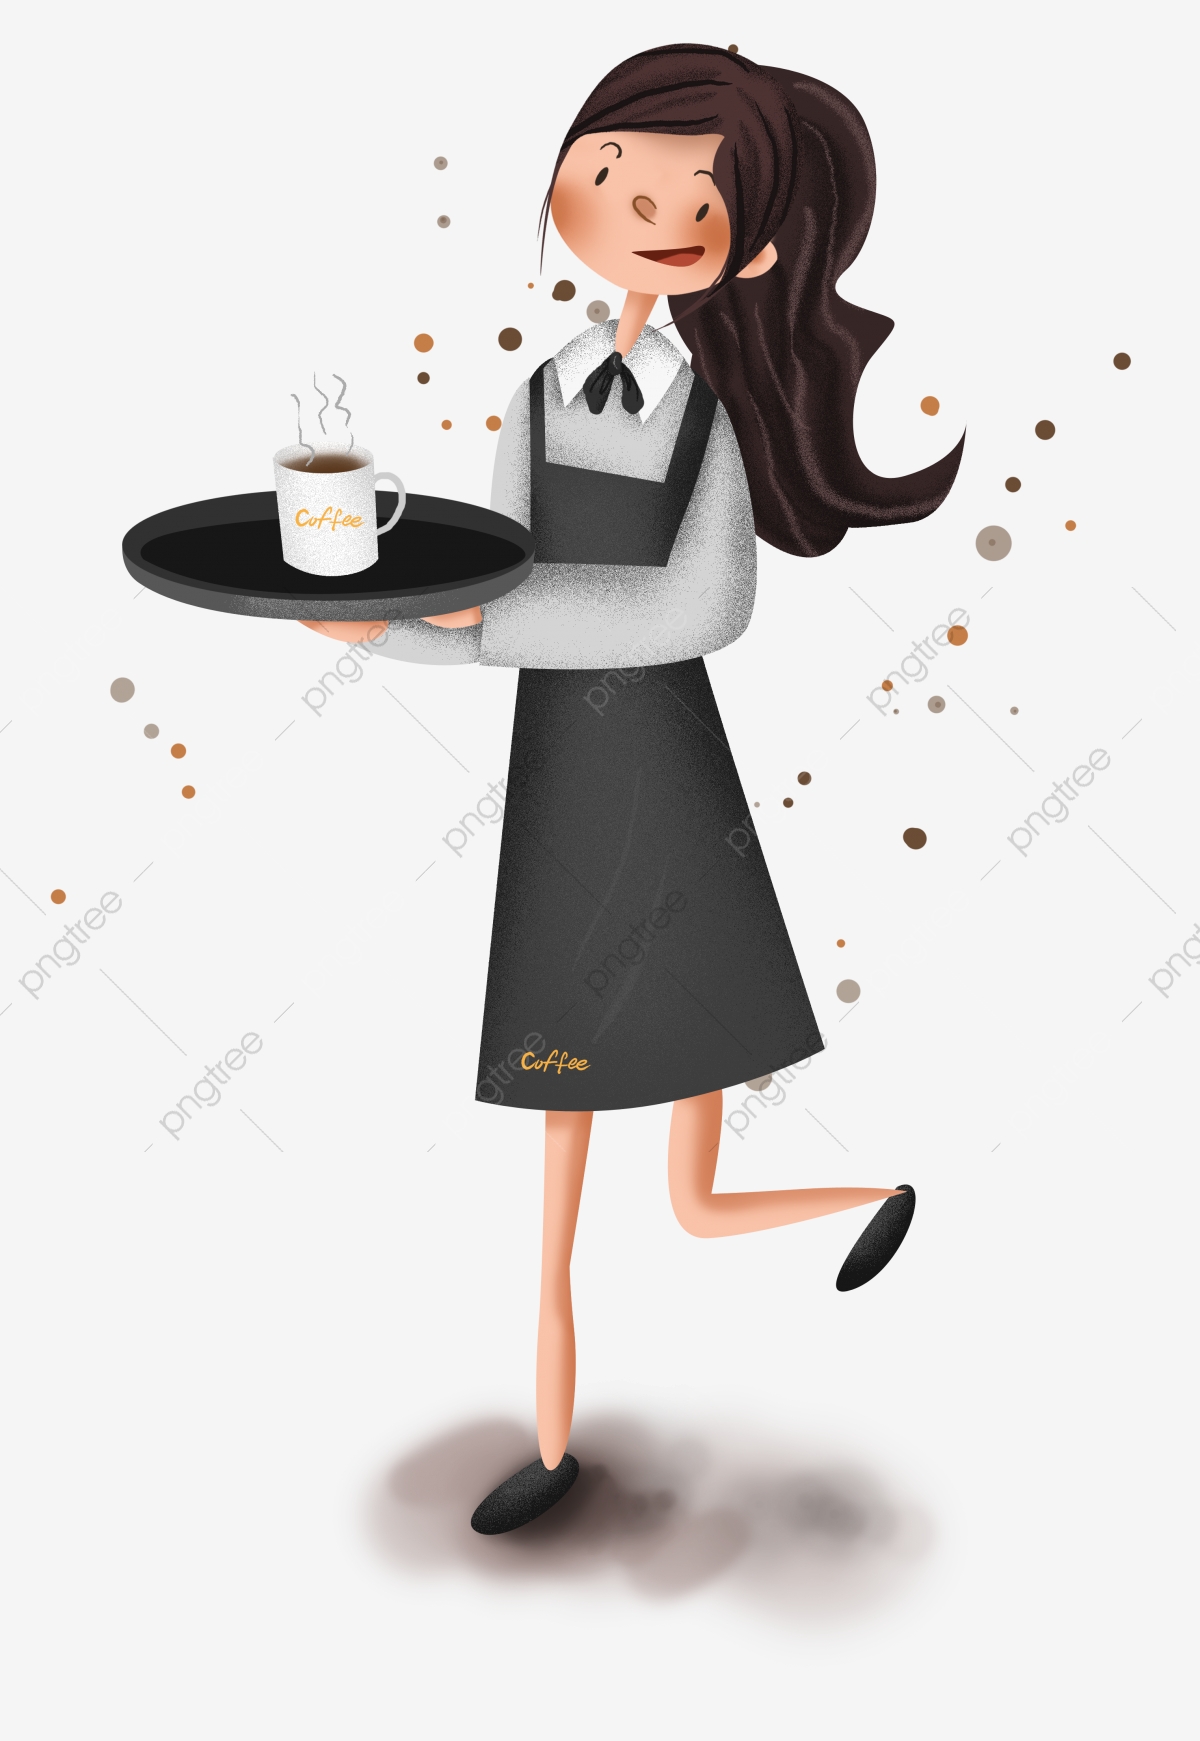 Waitress clipart coffee. Waiter hot cappuccino female